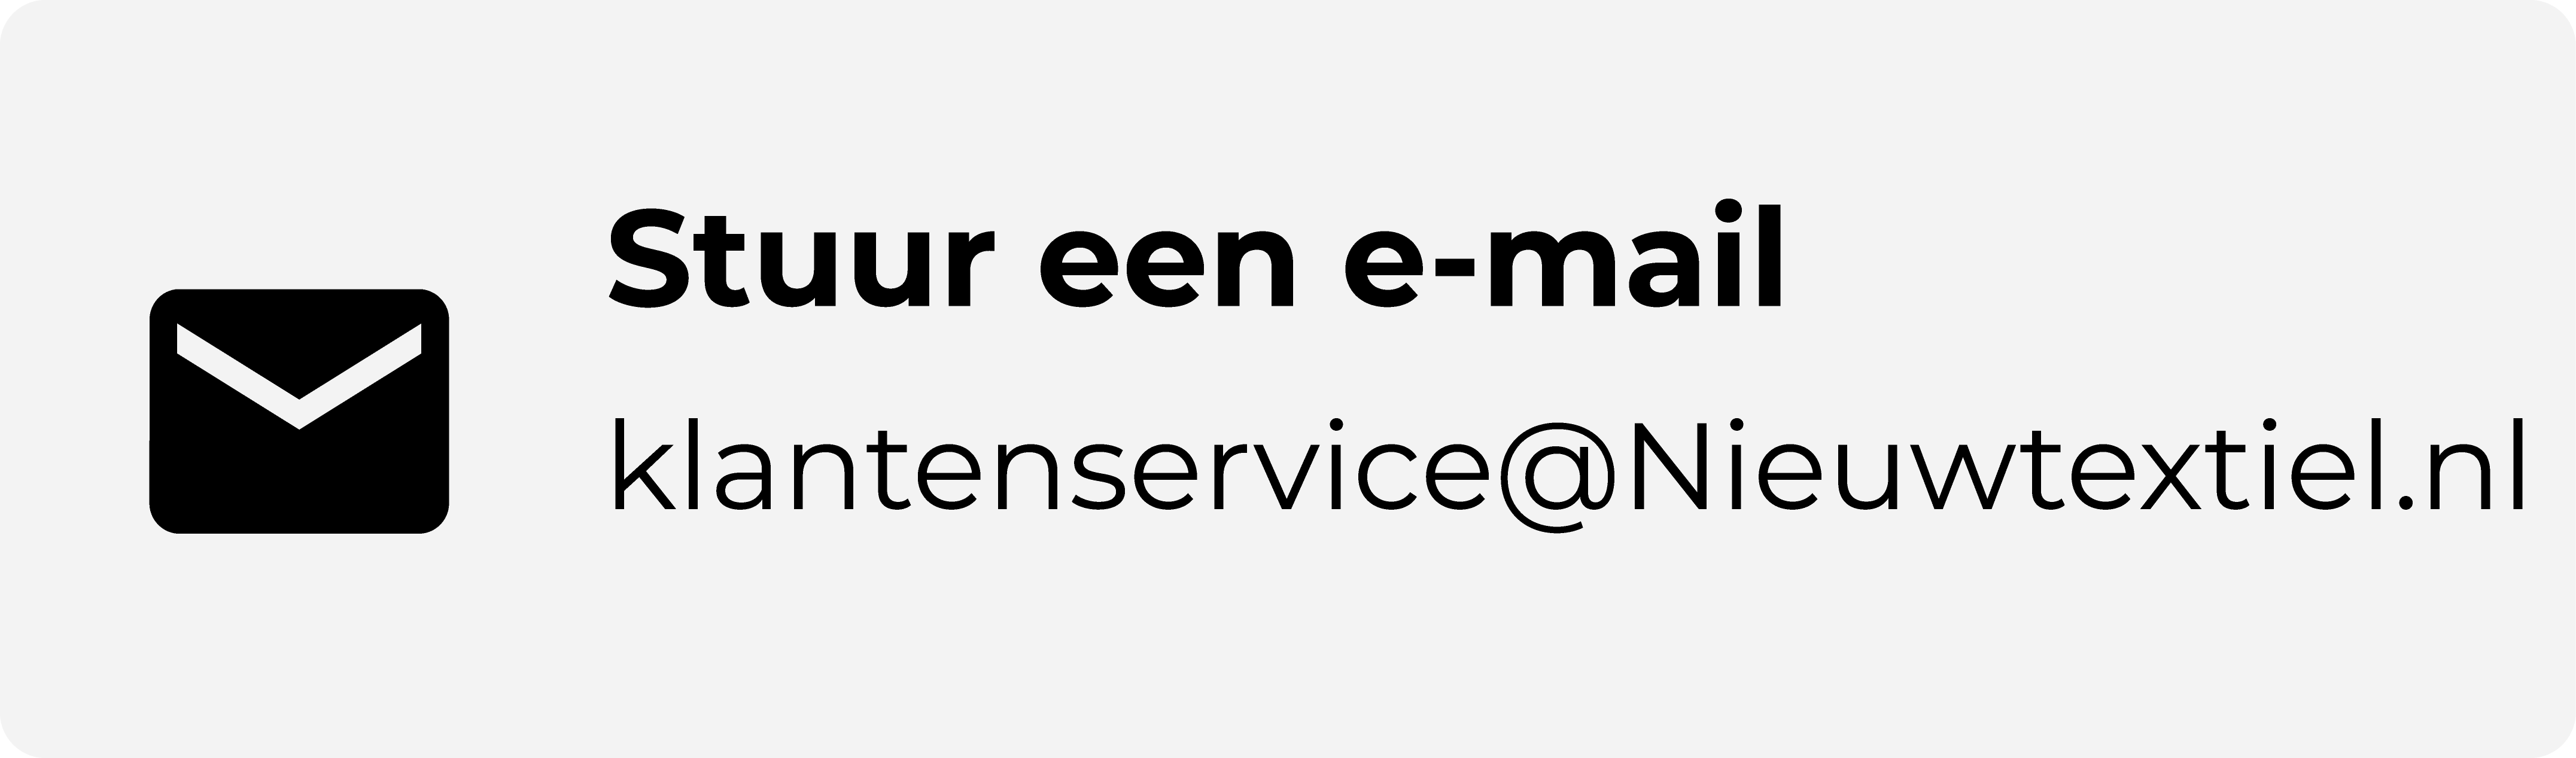 Mail ons NieuwTextiel.nl